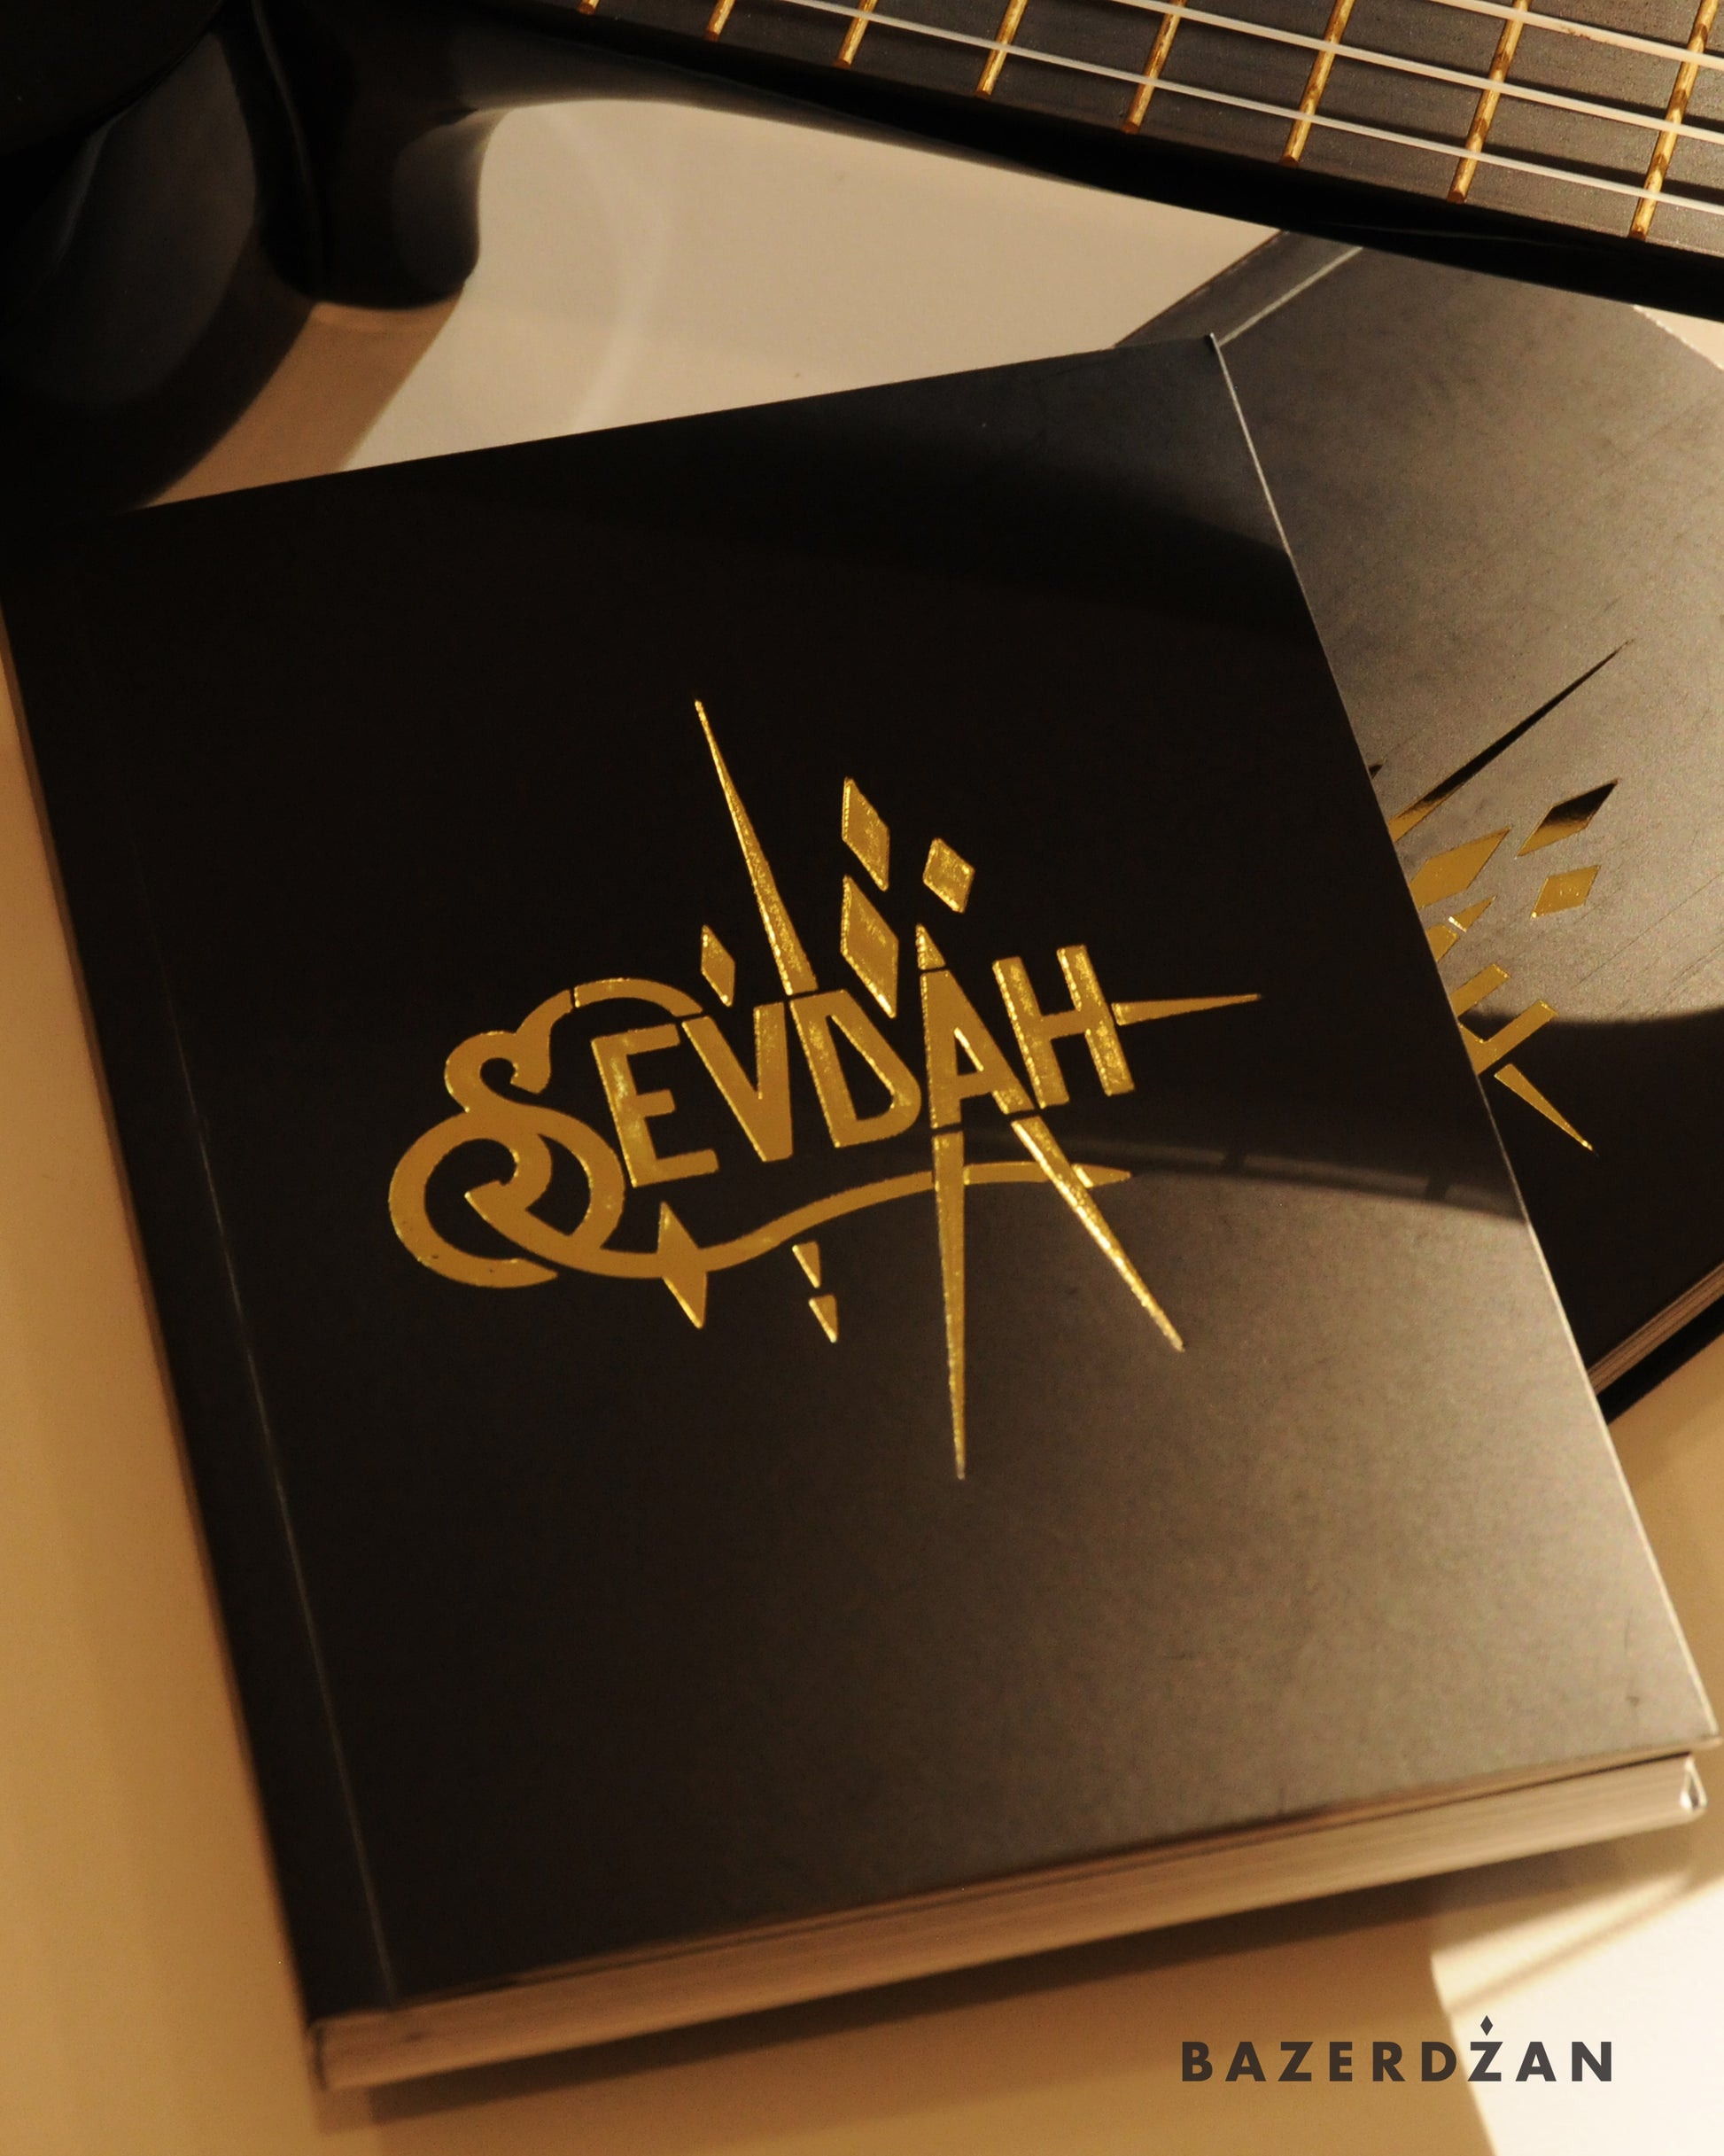 Book "Sevdah" by Damir Imamović - Bazerdzan